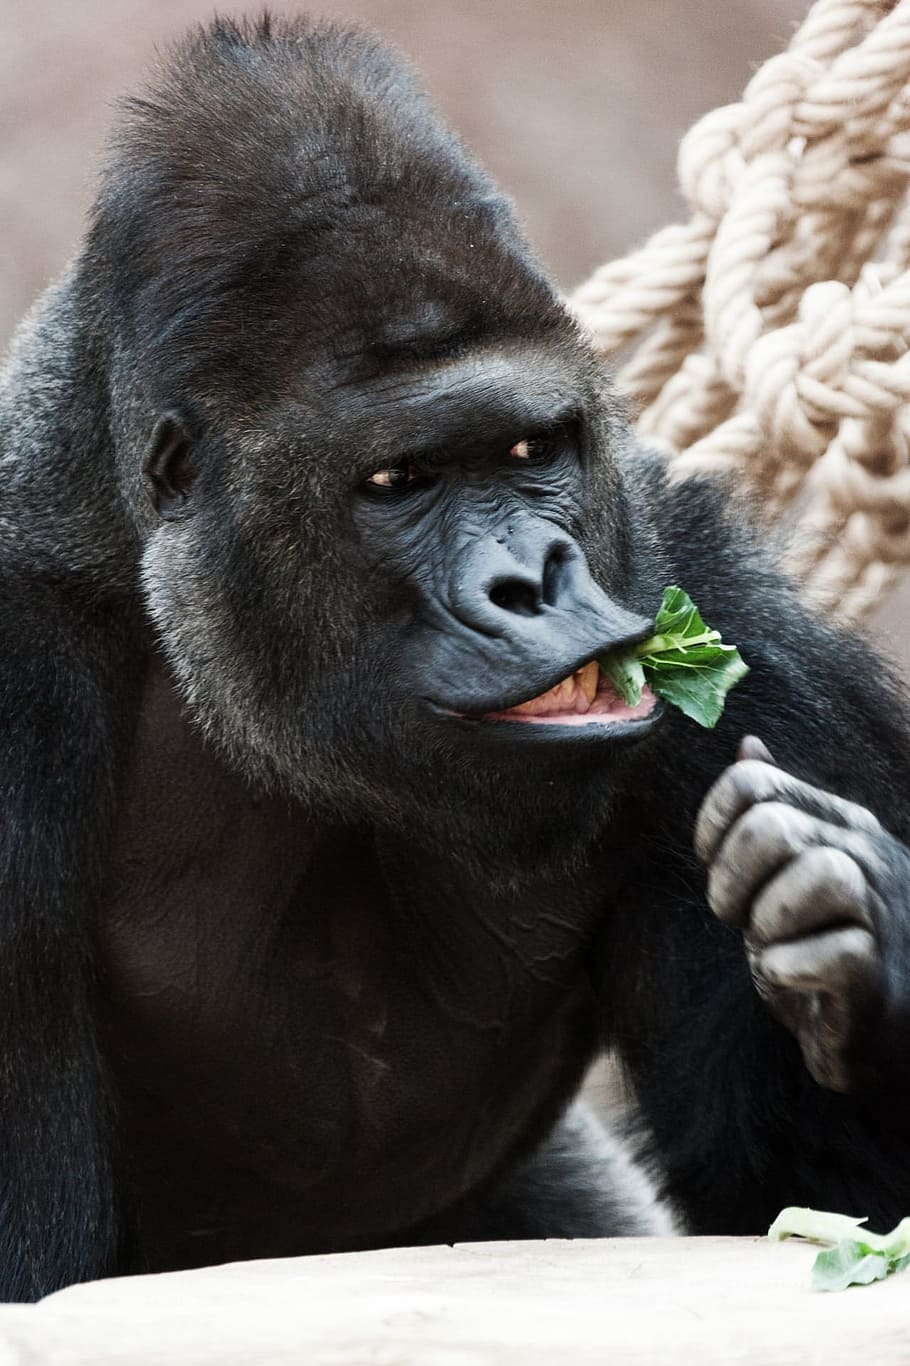 silver-back gorilla, eating, green, leaf close-up photo, Gorilla, Animal, Monkey, Primate, Ape, africa